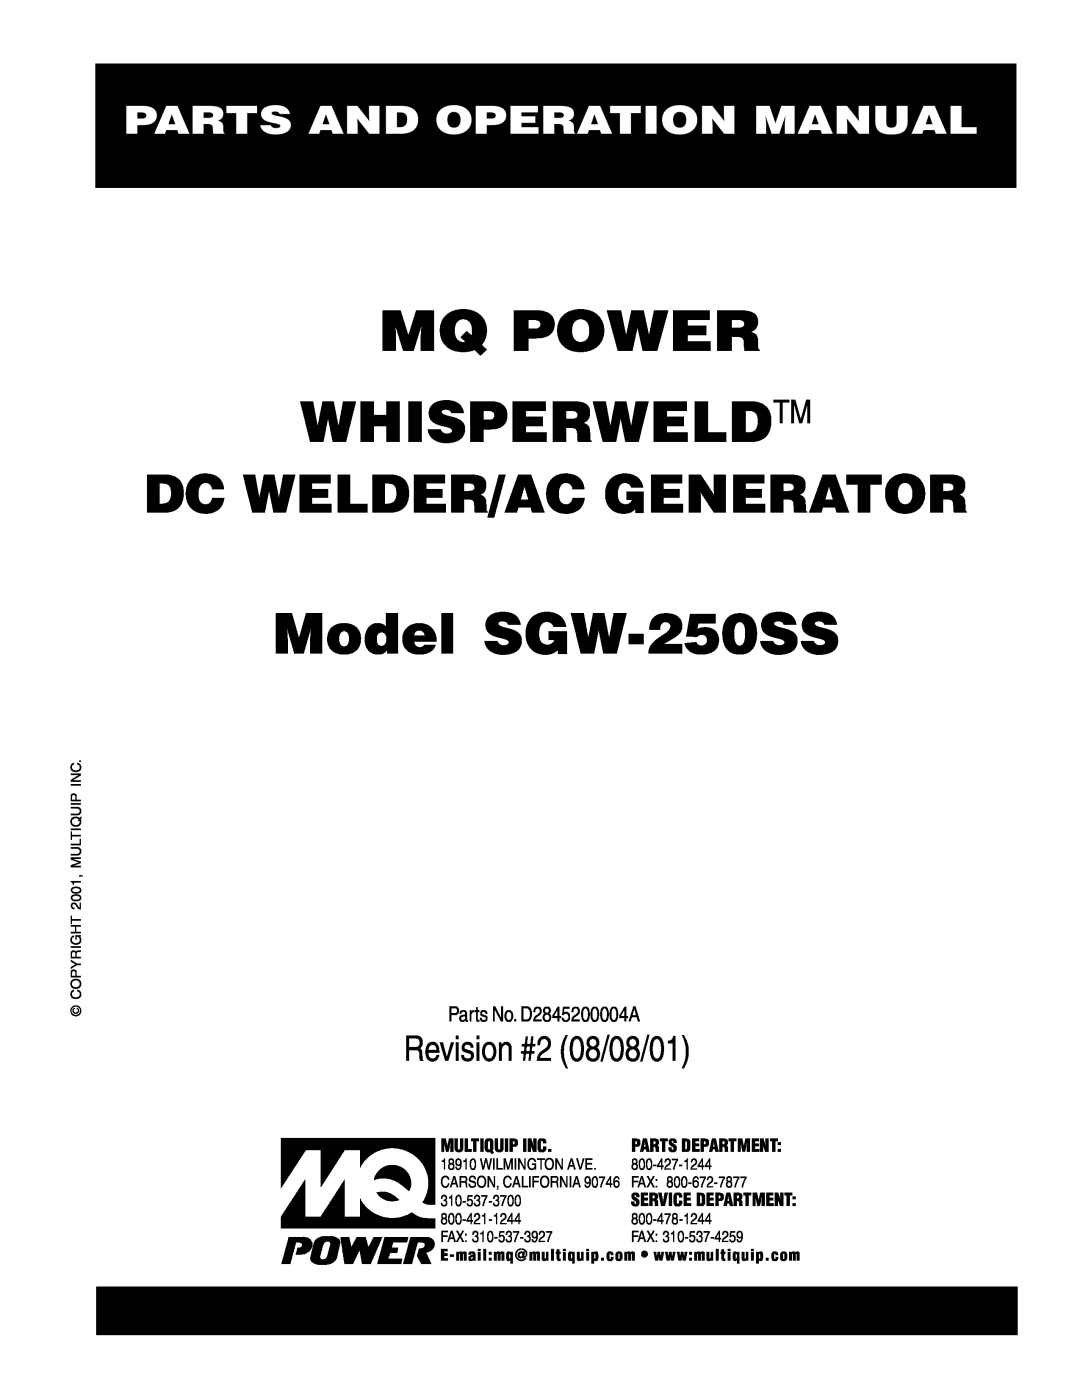 Multiquip operation manual Mq Power Whisperweldtm, Model SGW-250SS, Dc Welder/Ac Generator, Revision #2 08/08/01 